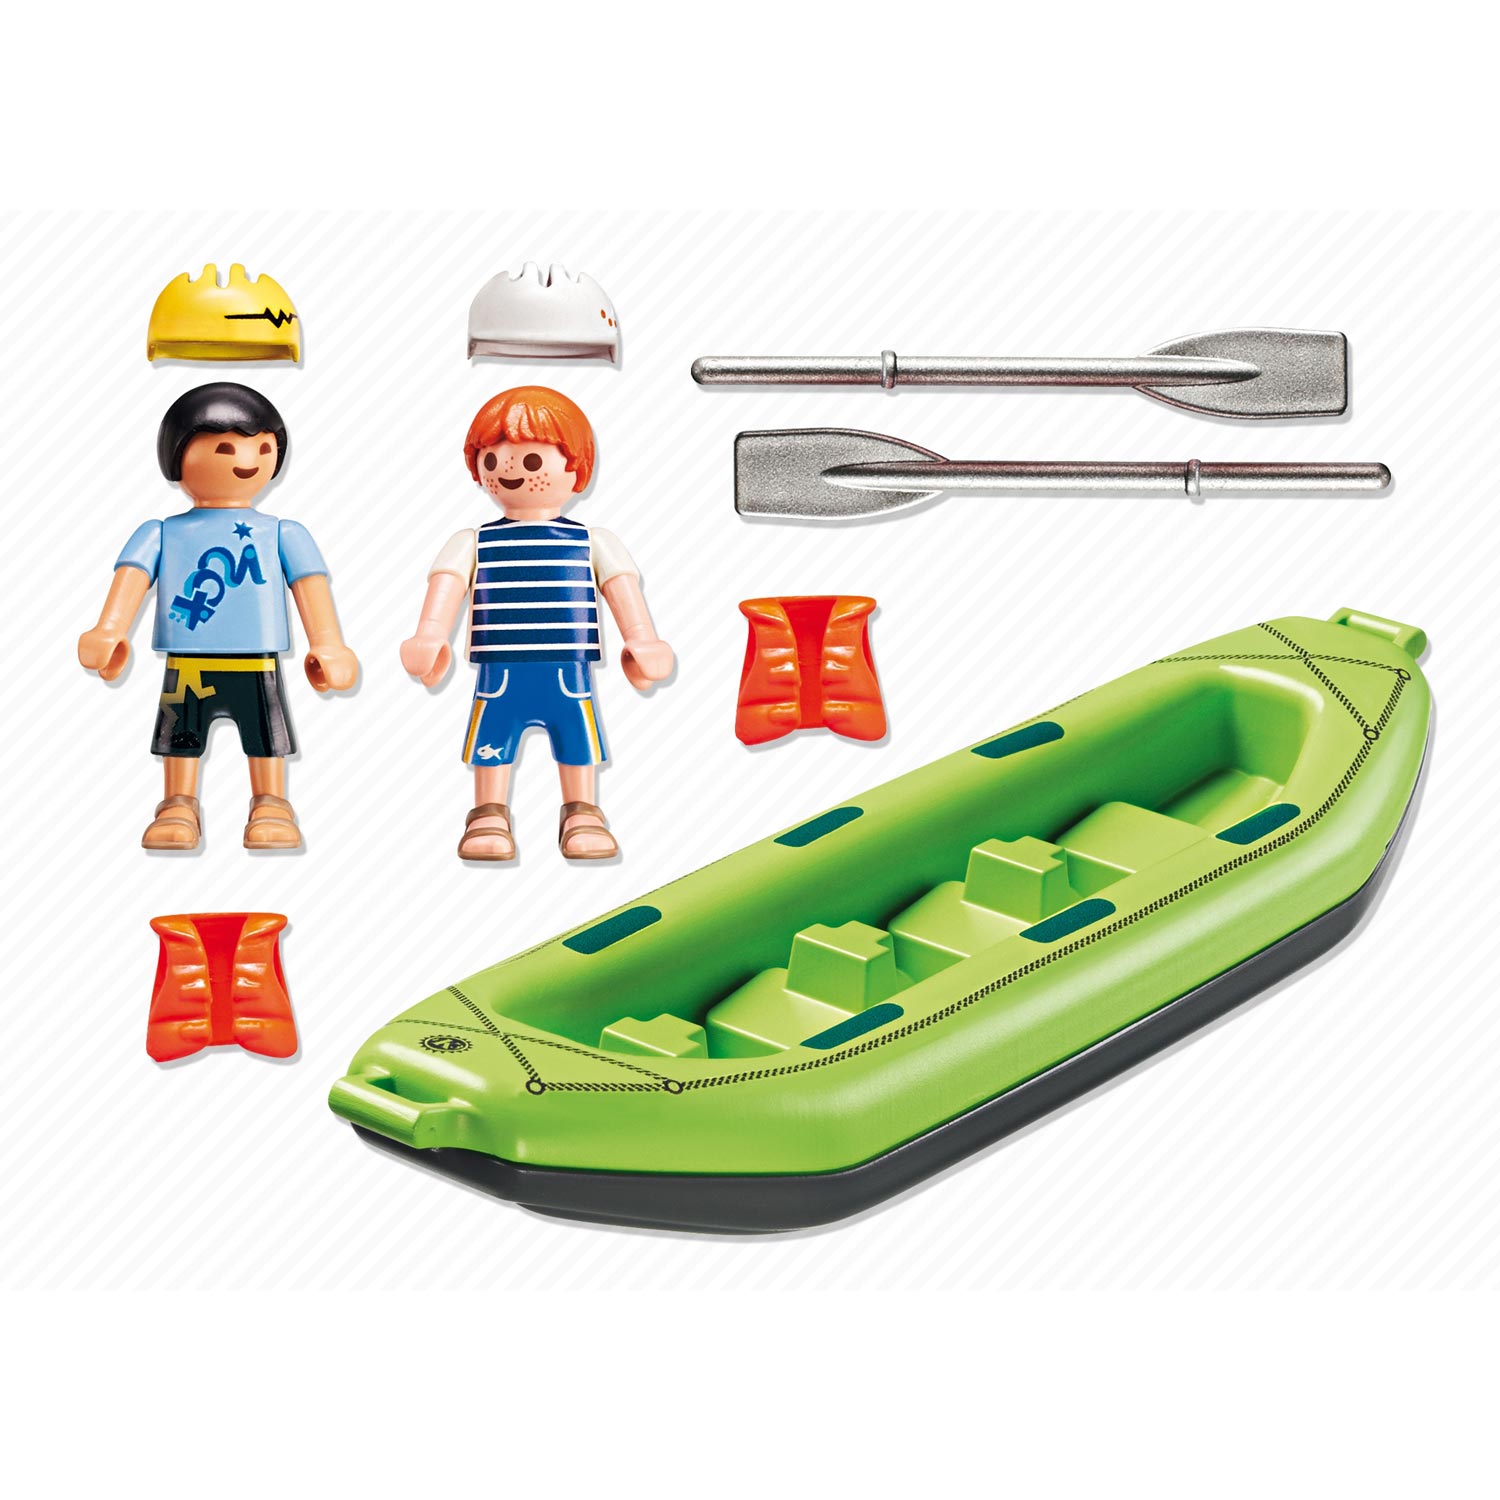 Playmobil 6892 Rafting